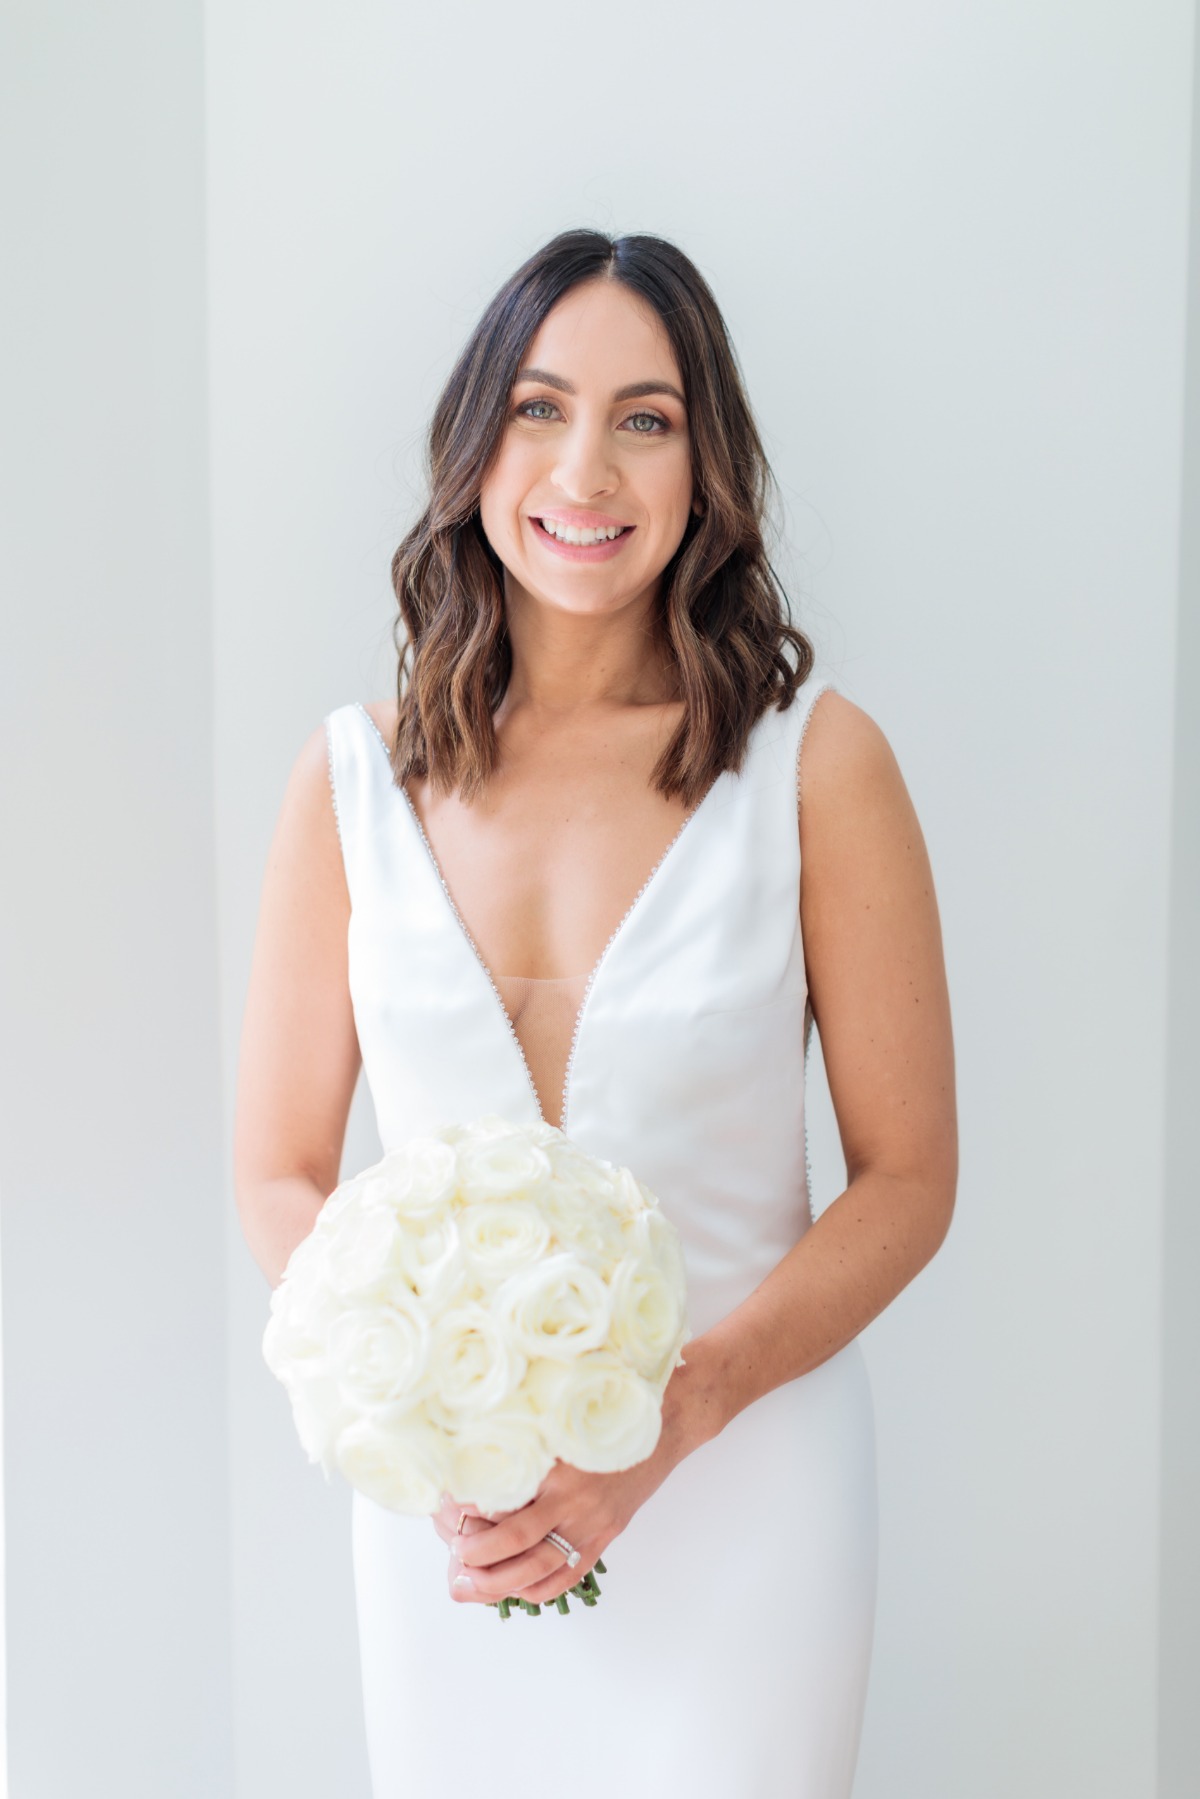 Atelier Pronovias wedding dress with white wedding bouquet